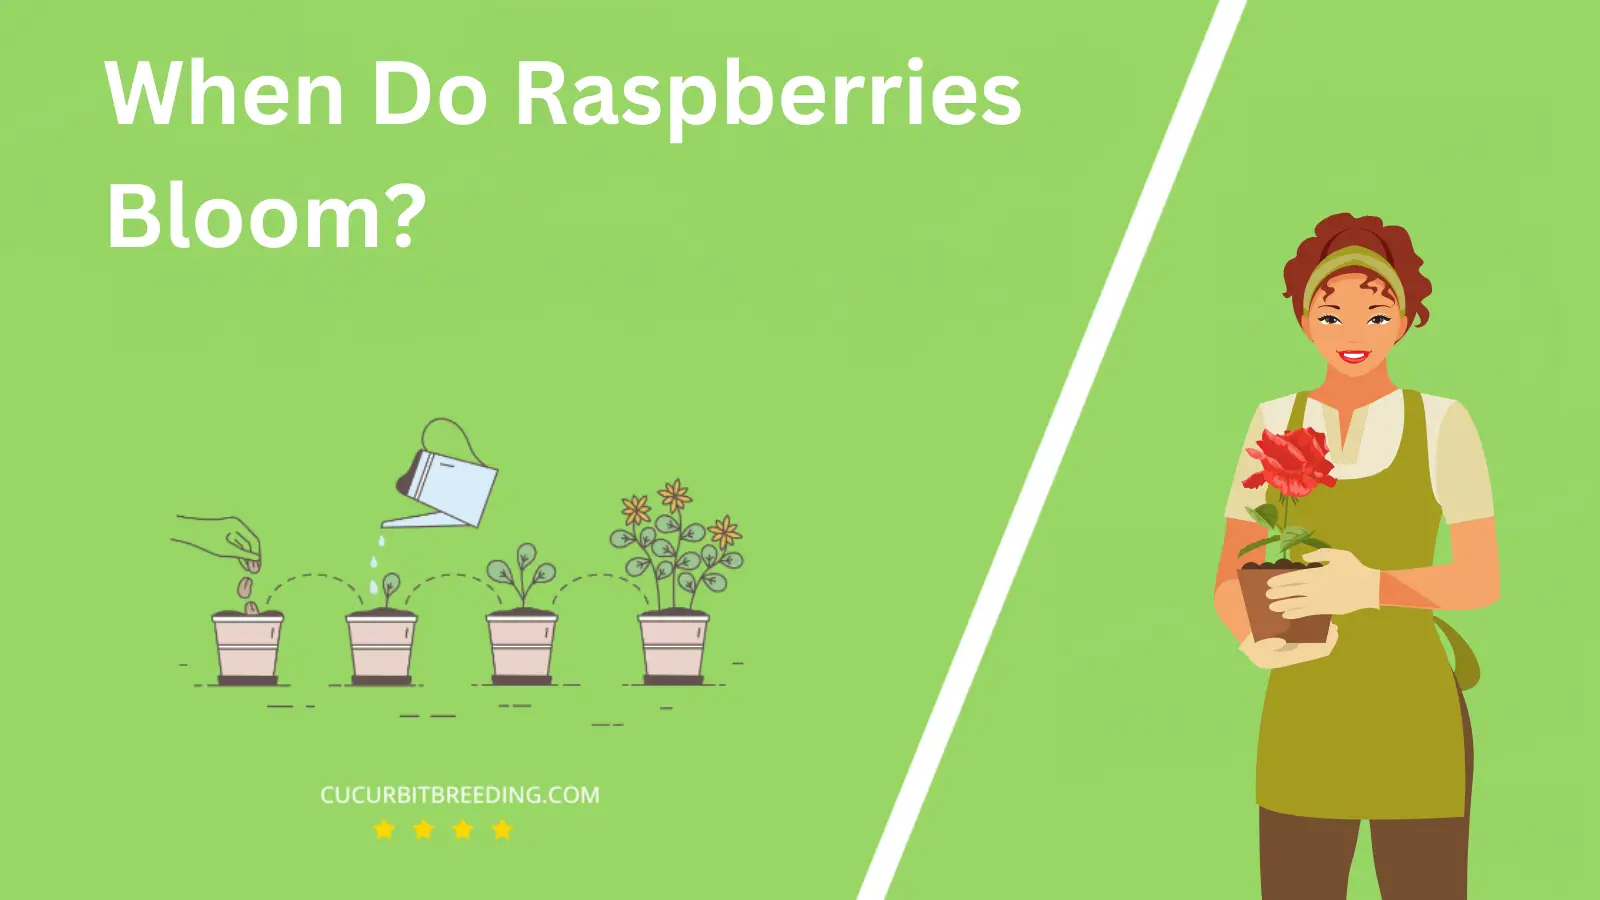 When Do Raspberries Bloom?